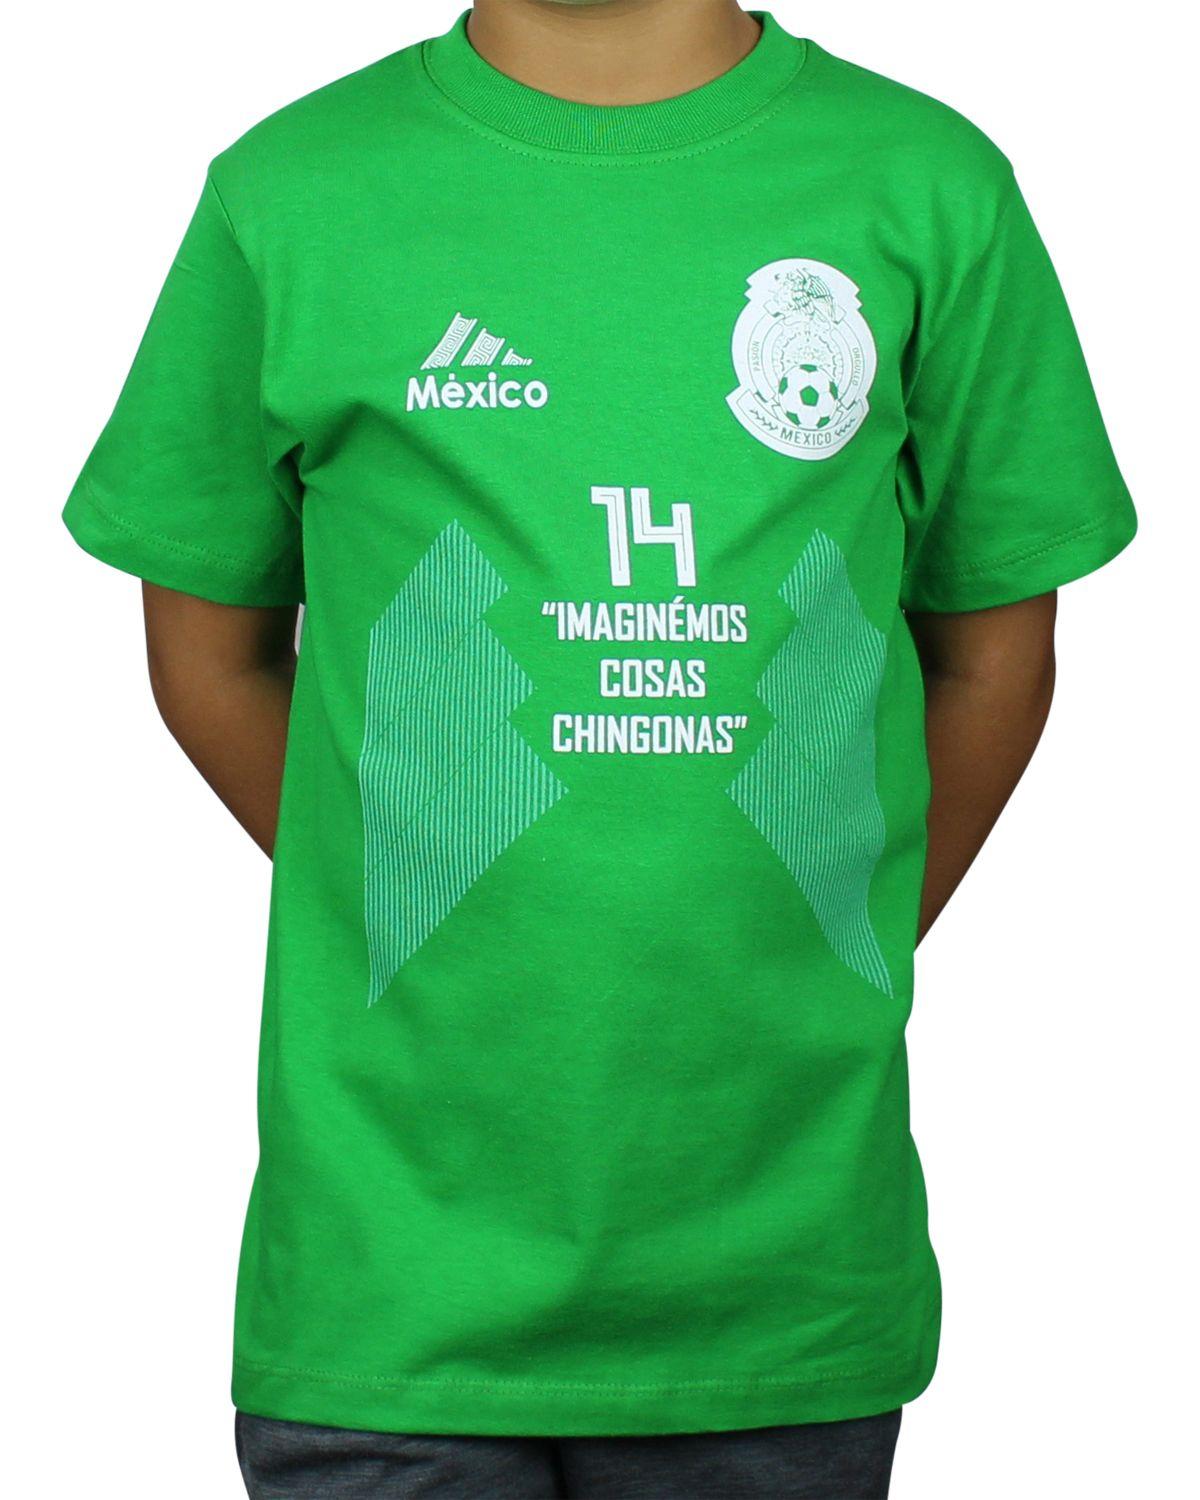 Chicharito Logo - Imaginemos Cosas Chingonas Kids Shirt Chicharito Javier Hernandez Seleccion  (XL)